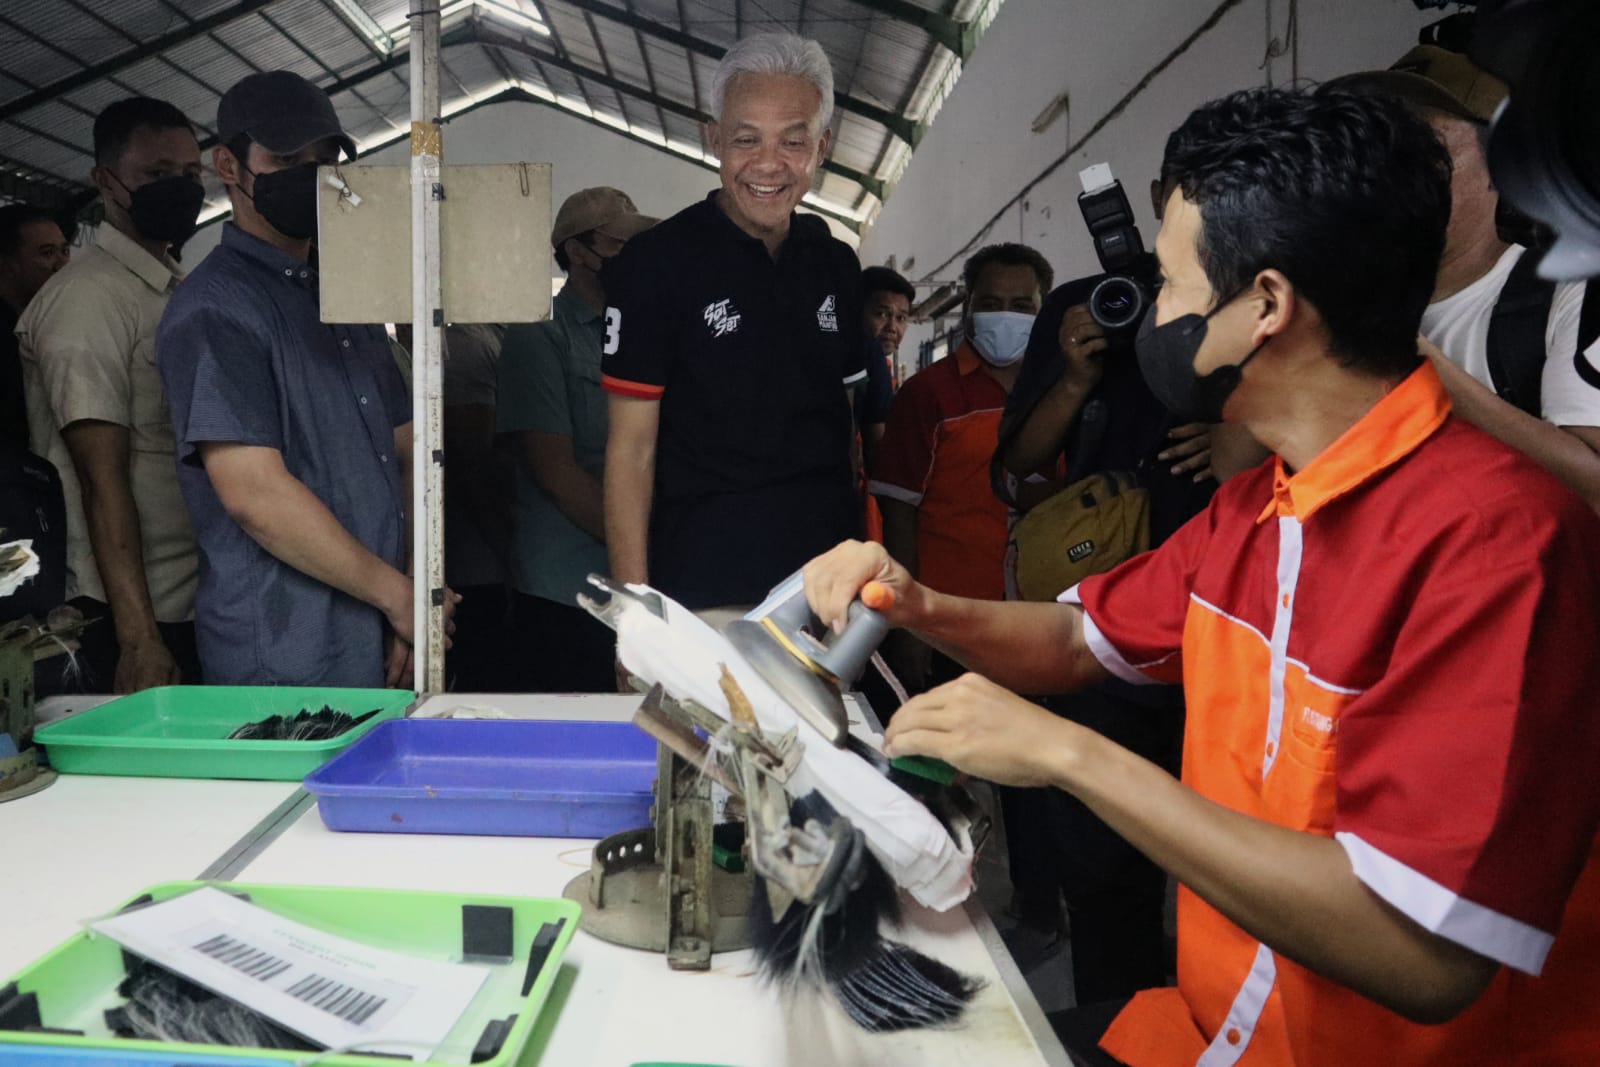 Di Waktu Bersamaan, Ganjar Pranowo dan Susilo Bambang Yudhoyono Kunjungi Pabrik Bulu Mata Purbalingga